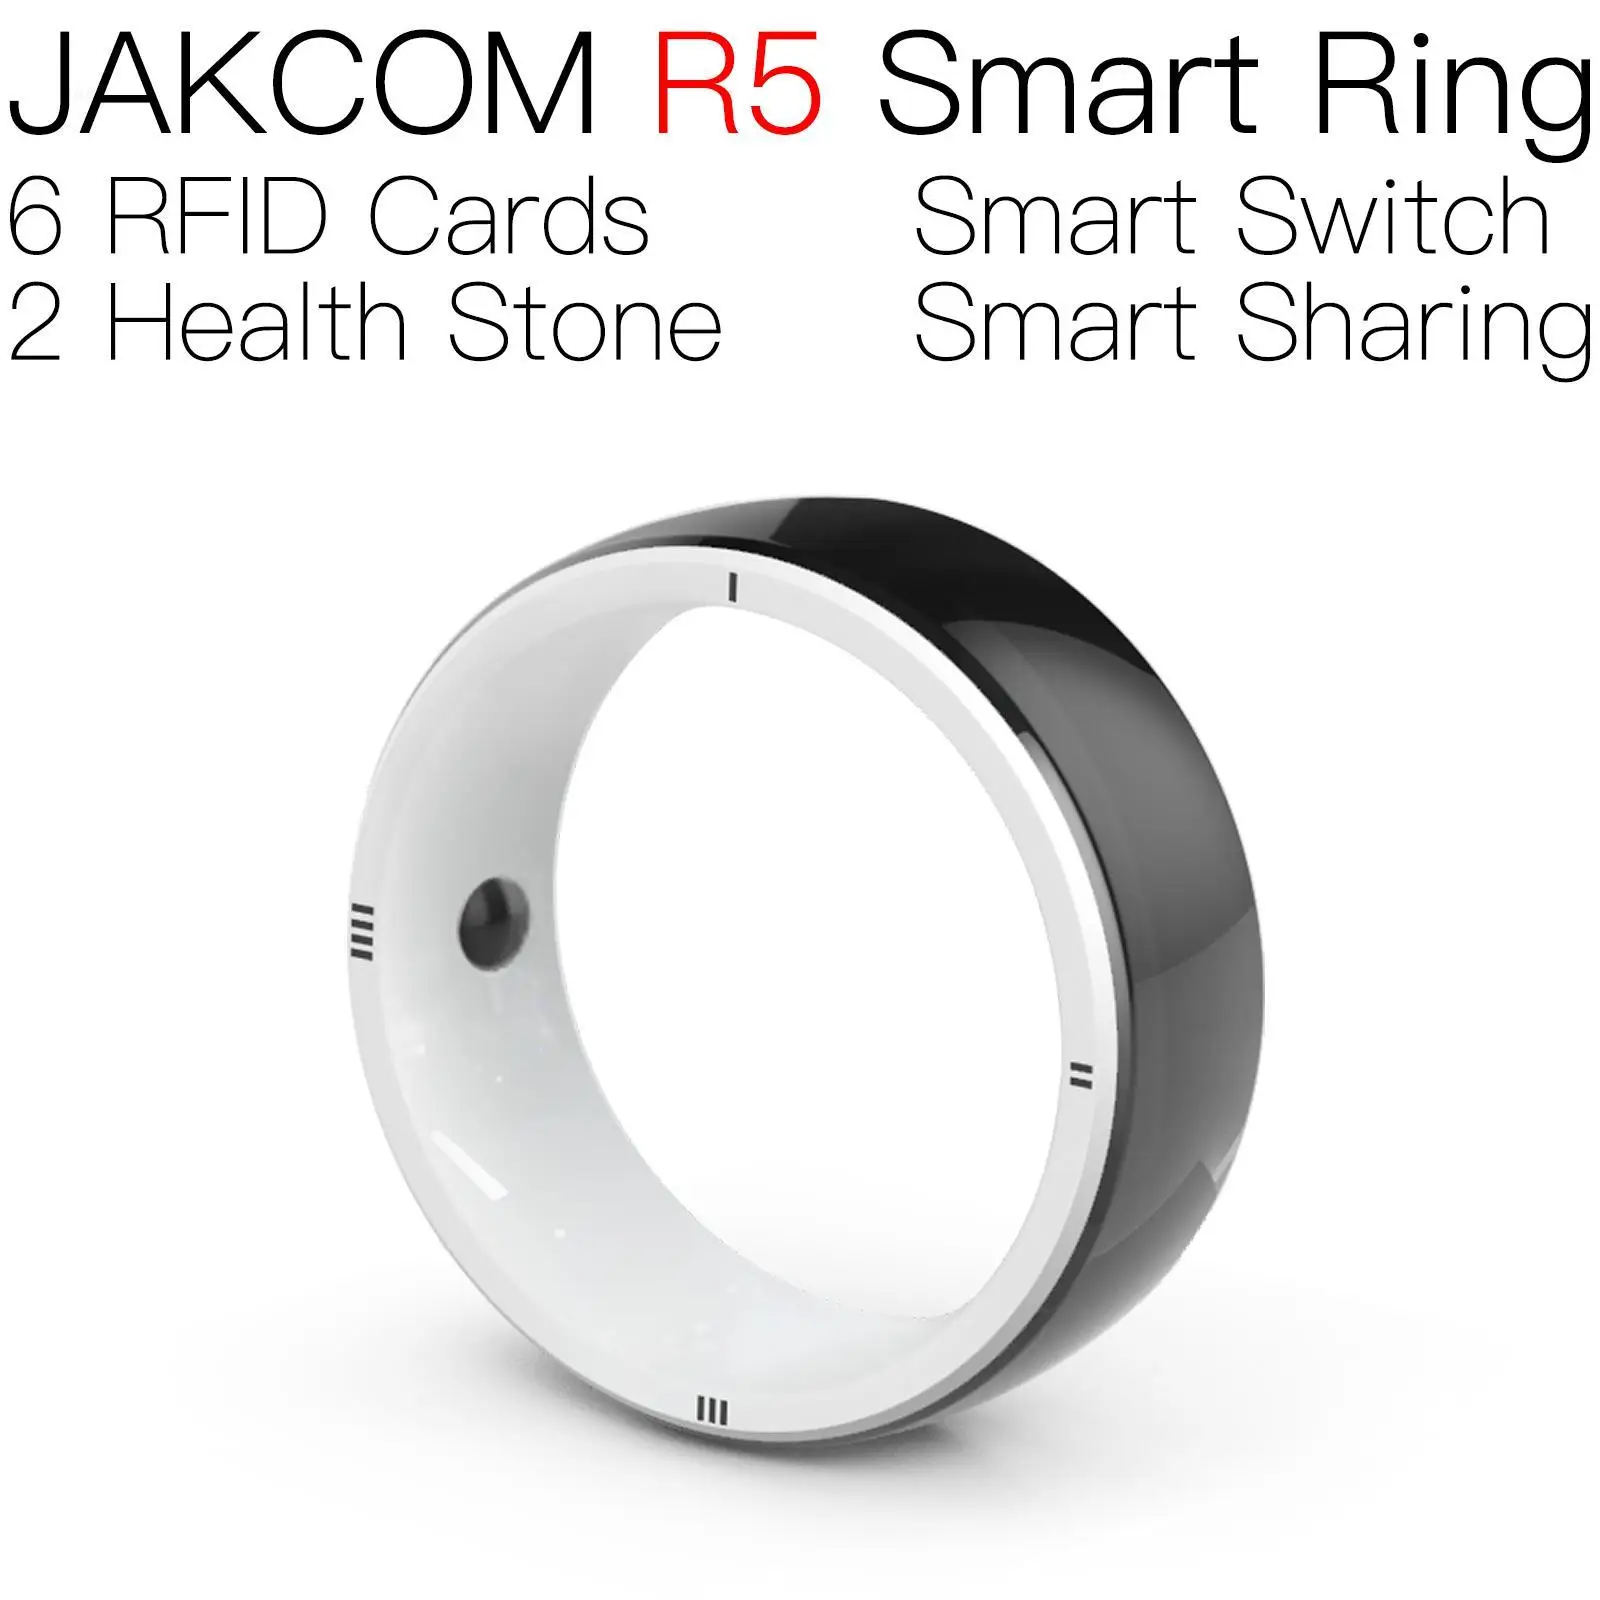 

JAKCOM R5 Smart Ring better than wrists watch for men women watches luxury gateway 3 sport accessories wifi ir remote control